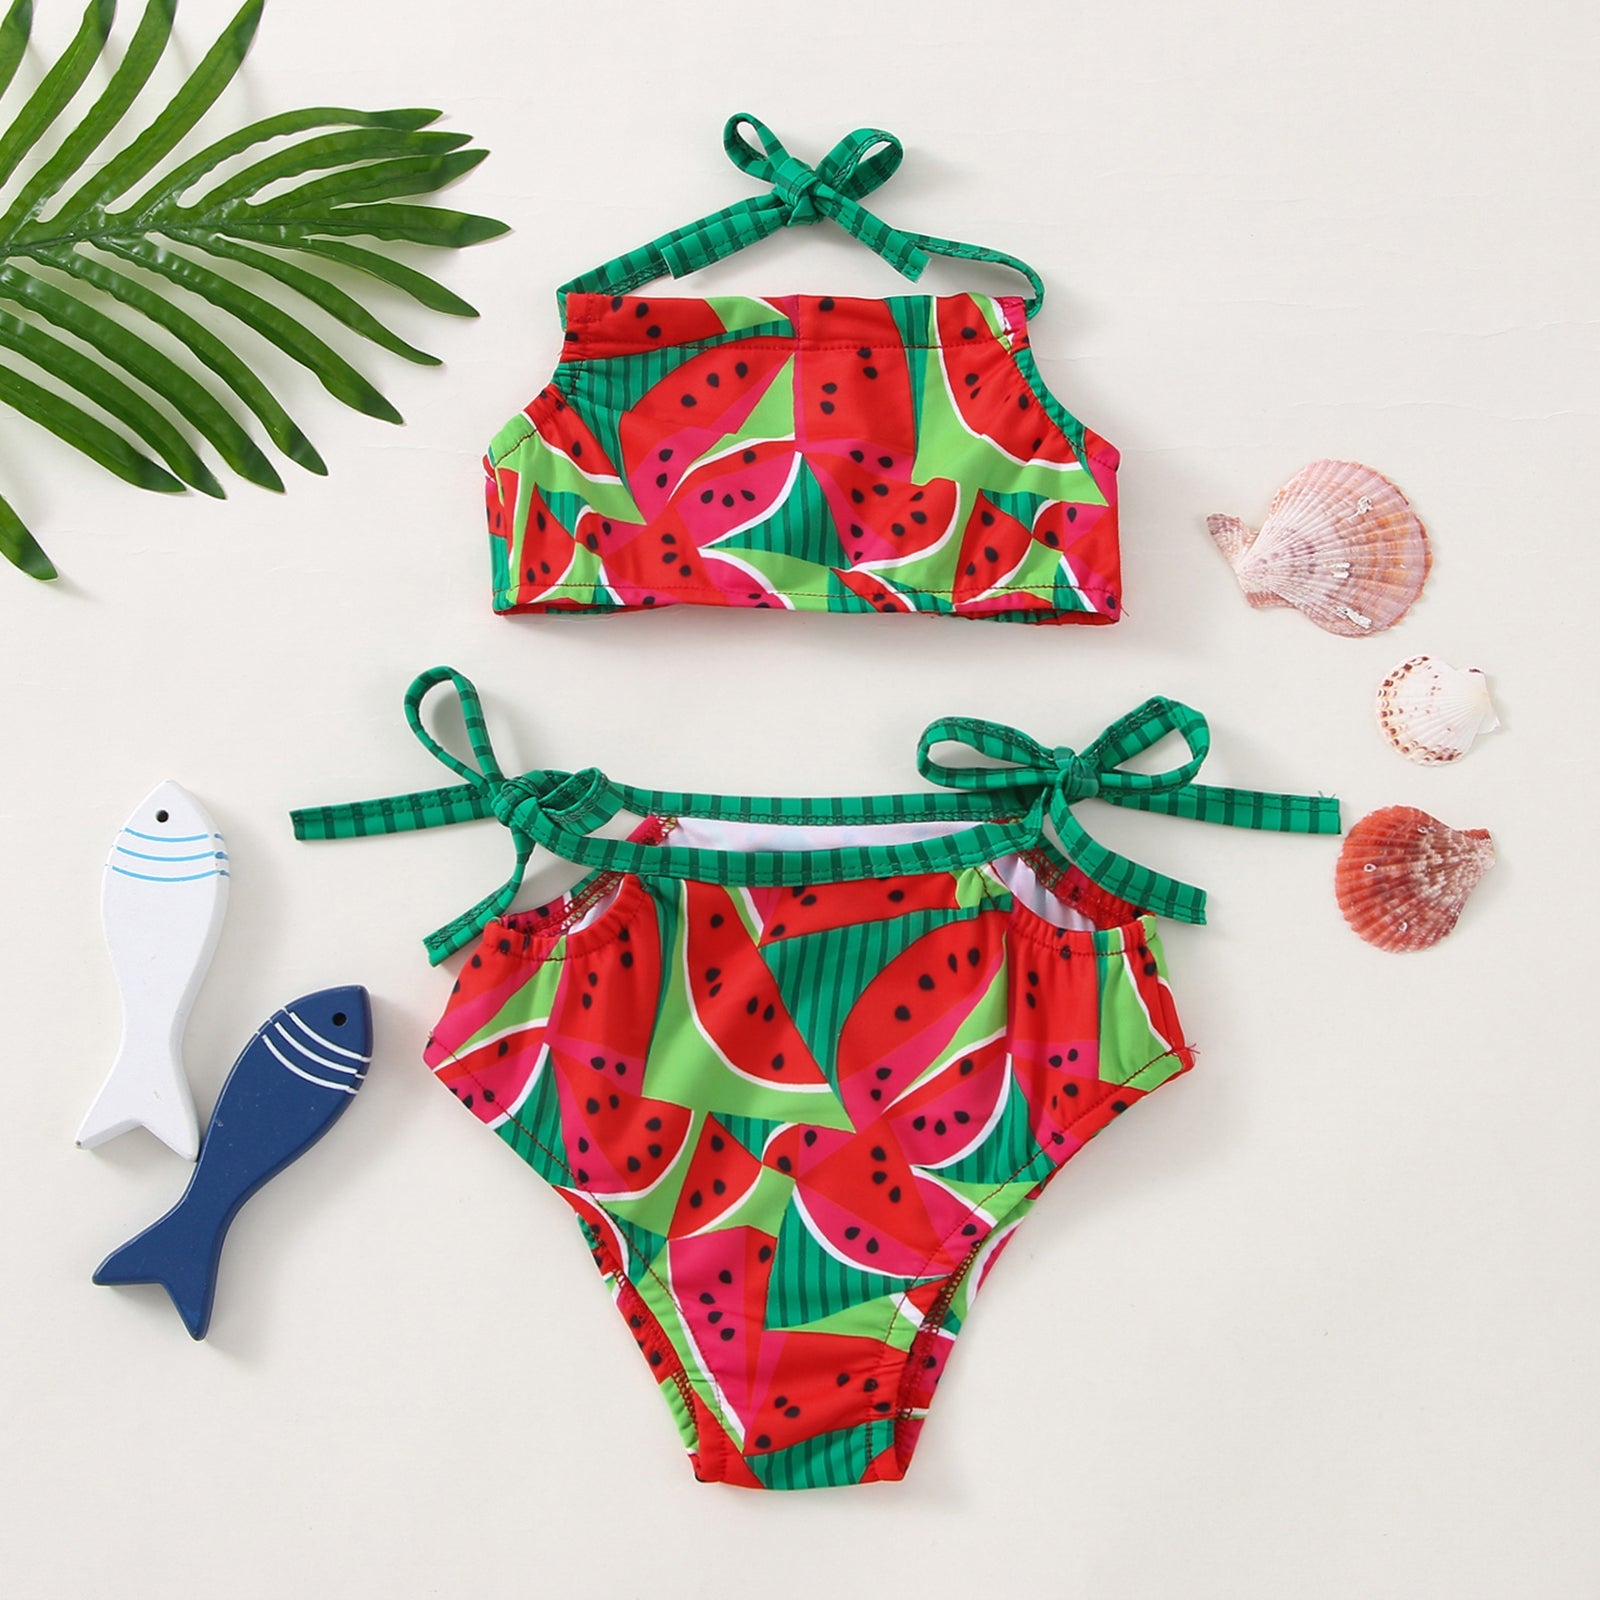 Watermelon Print Swimsuit.